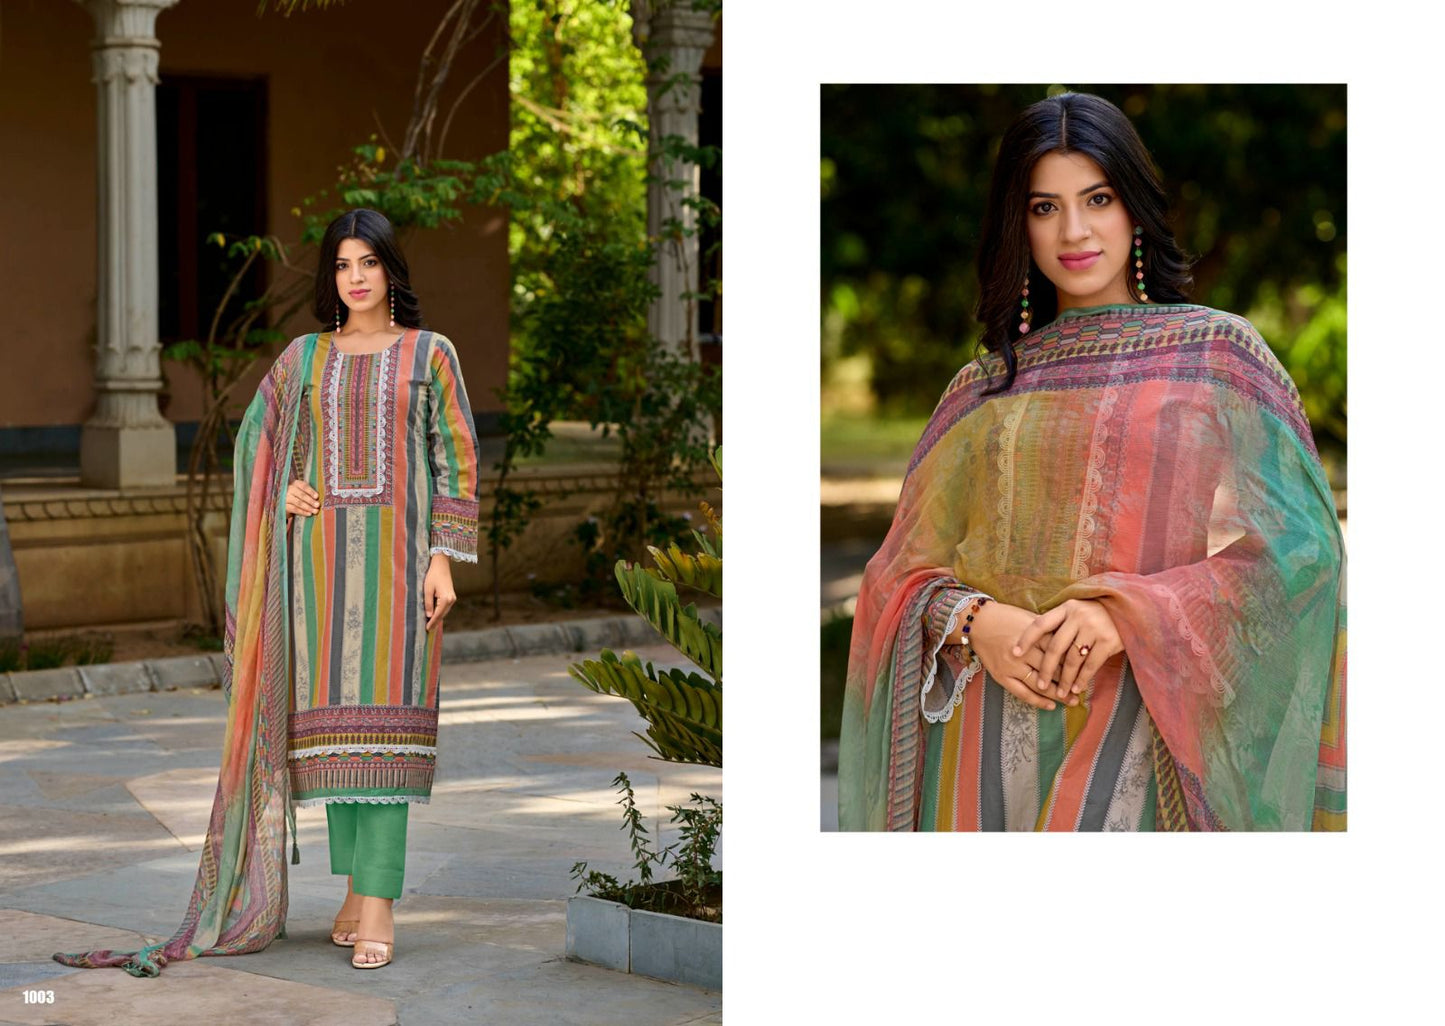 Hania Kilory Lawn Cotton Karachi Salwar Suits Wholesaler